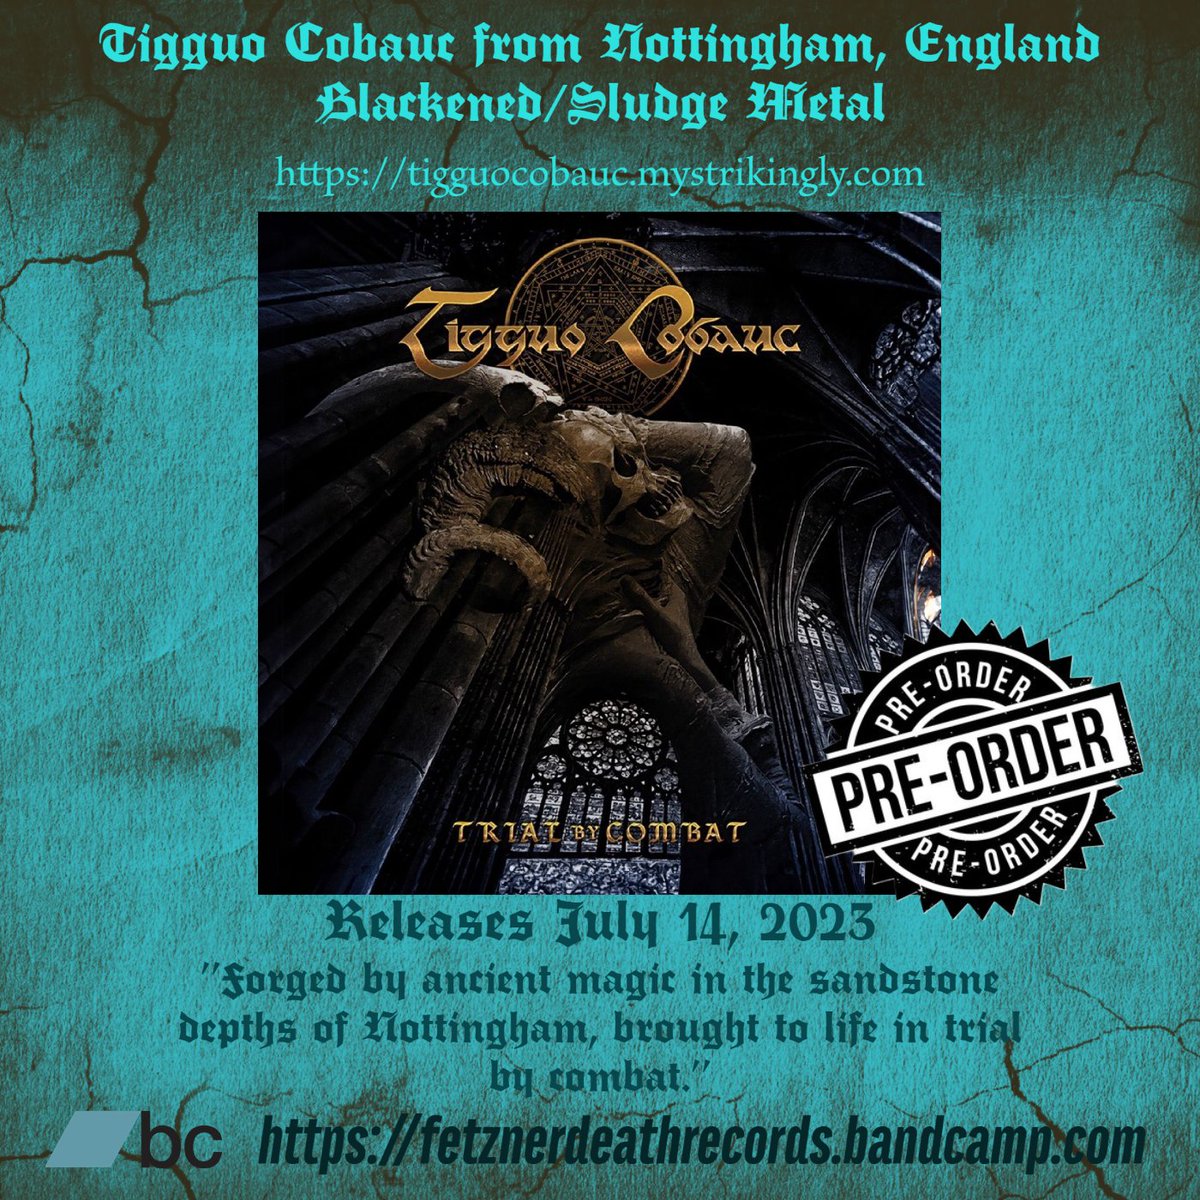 6 tracks + bonus album by blackened sludge metal outfit Tigguo Cobauc from nottingham, england

Releases July 14, 2023 via #fetznerdeathrecords

fetznerdeathrecords.bandcamp.com/album/tigguo-c…

#tigguocobauc #sludge #sludgemetal
#sludgedoom #sludgedoommetal 
#BlackenedSludge #blackenedsludgemetal